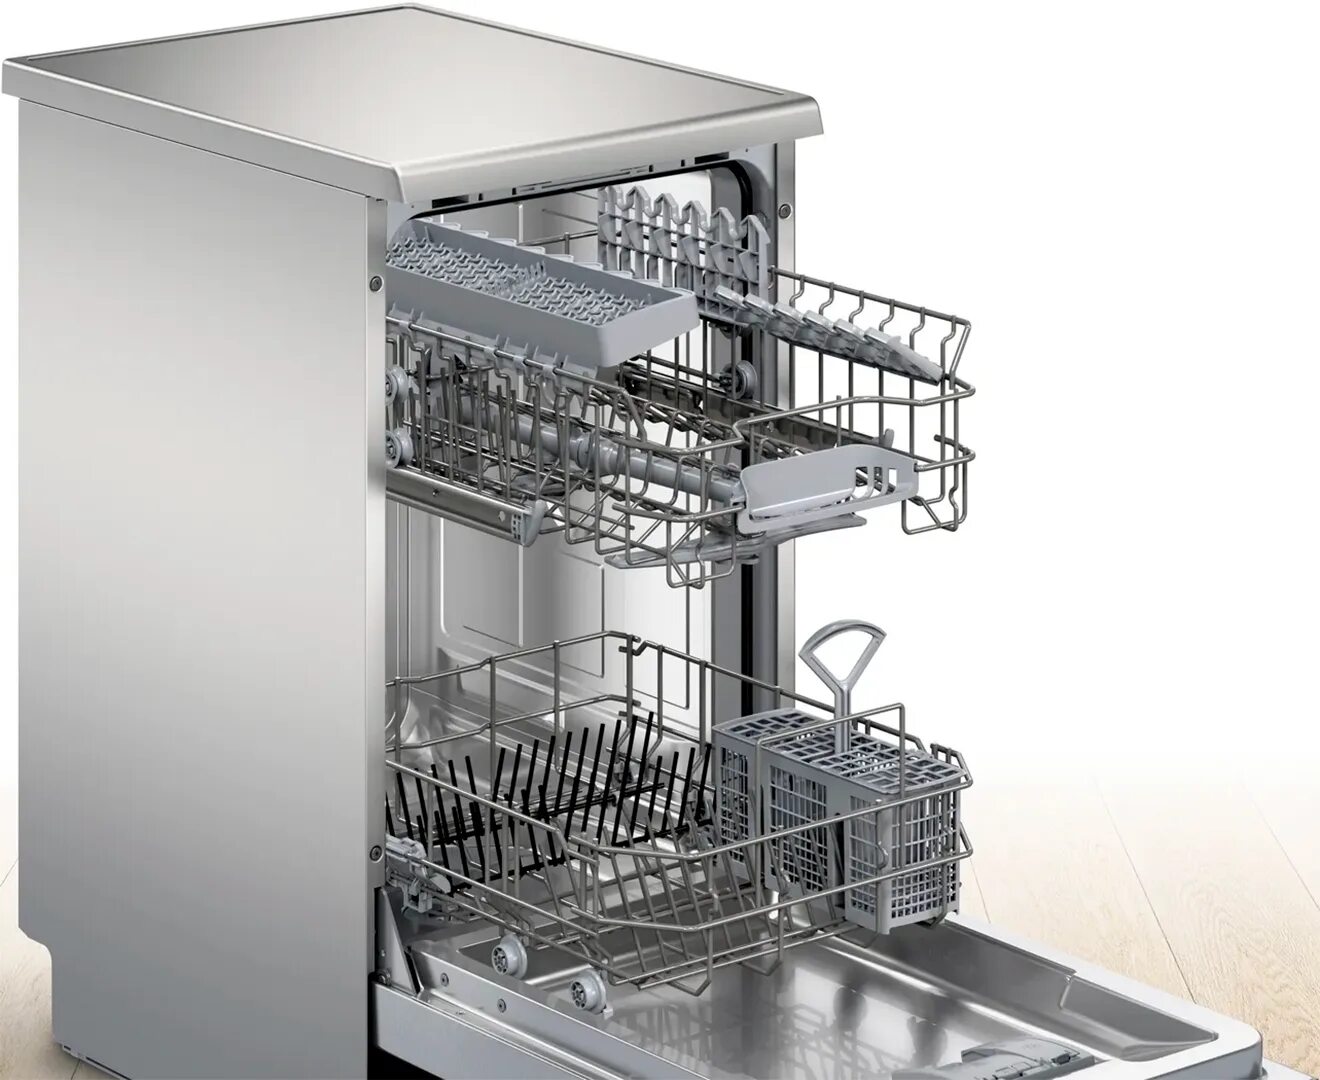 Bosch sps2iki02e. Посудомоечная машина Bosch sms8zdi48m,. Посудомоечная машина бош 45 см. Посудомоечная машина Bosch 45 отдельностоящая. Купить посудомоечную машину 45 см бош